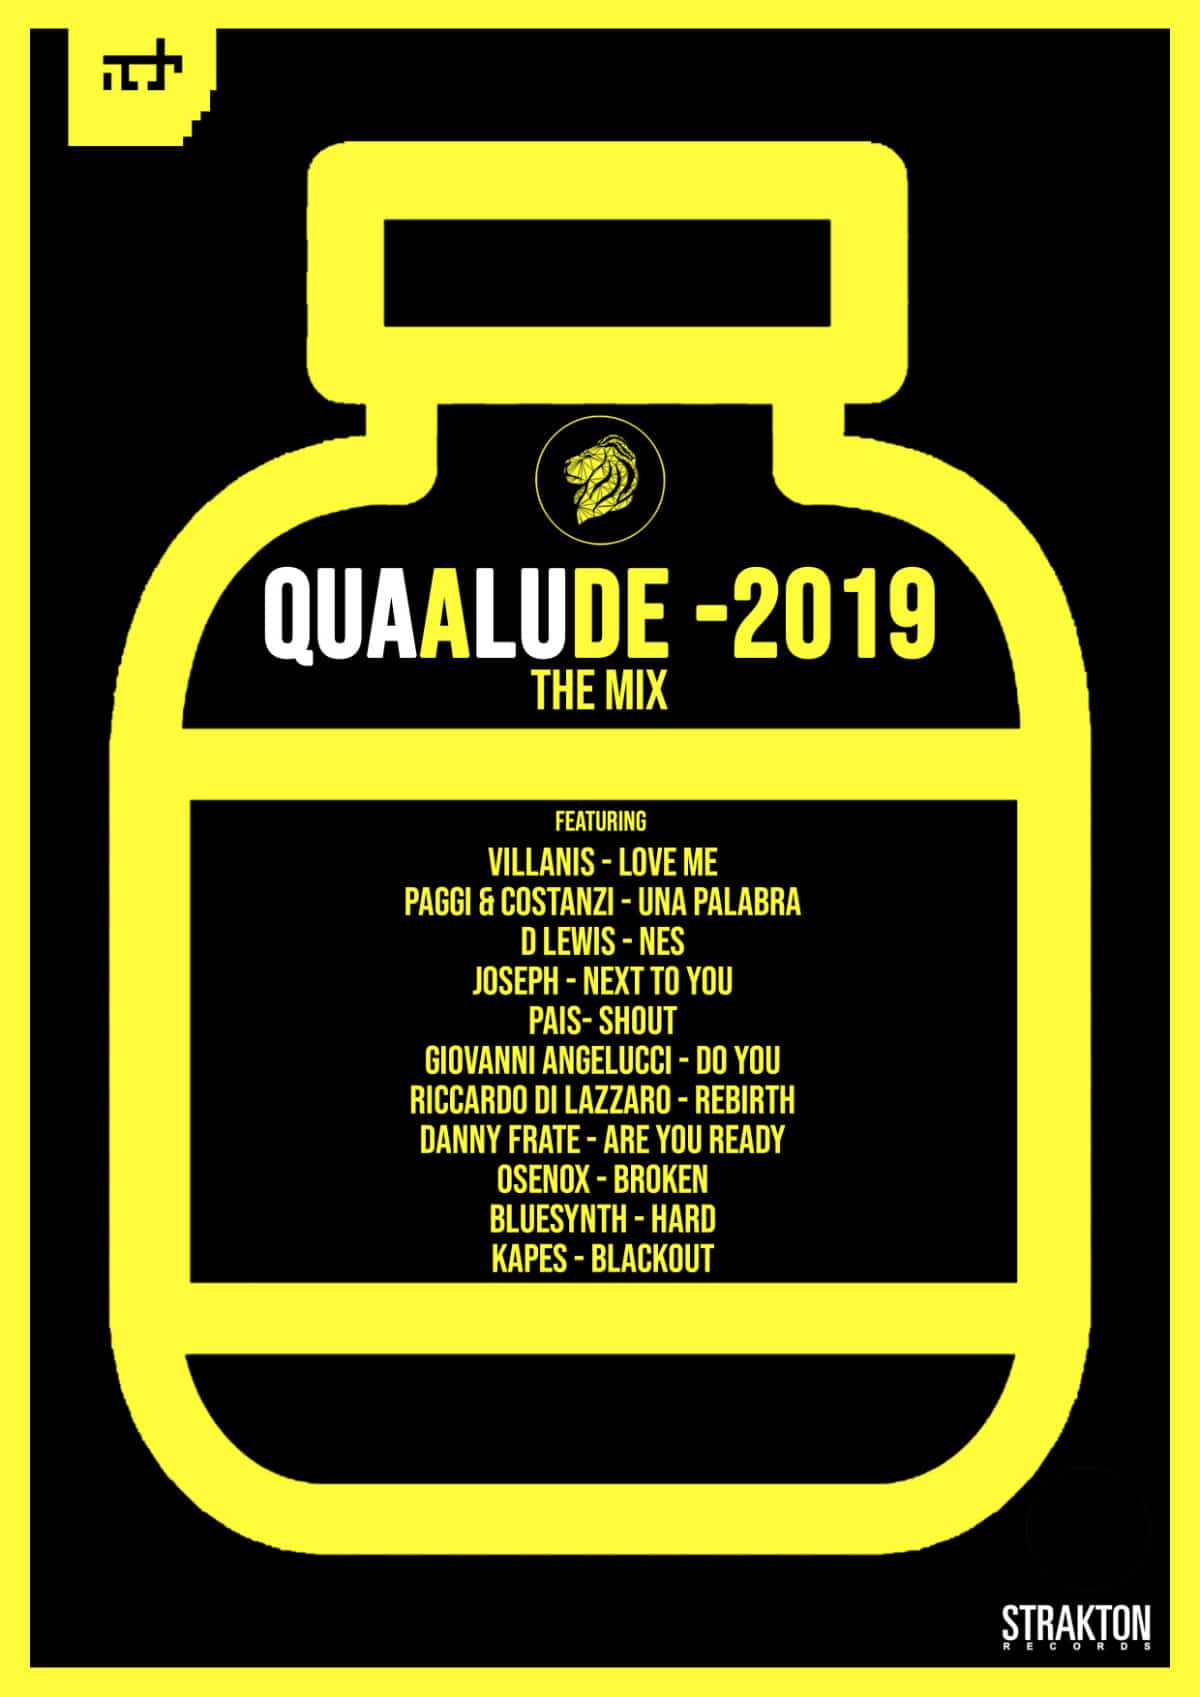 Quaalude 2019 - The mix